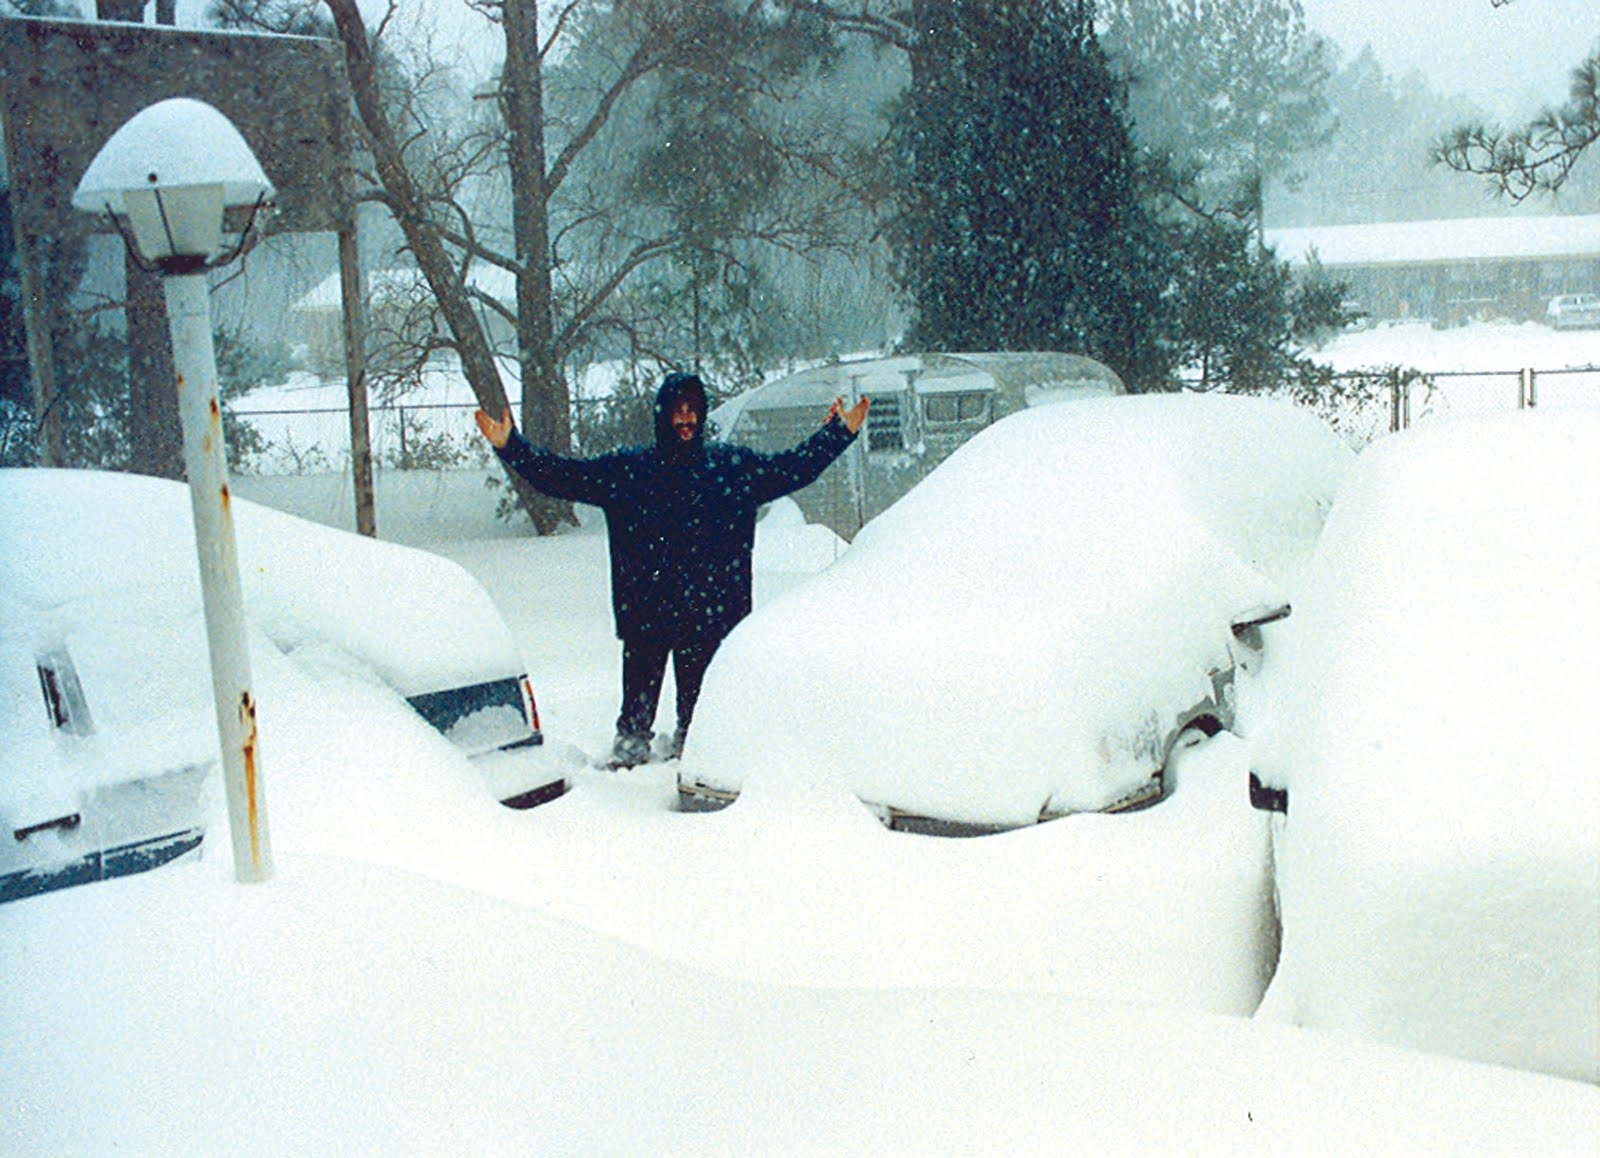 Christmas Snowstorm December 23, 1989